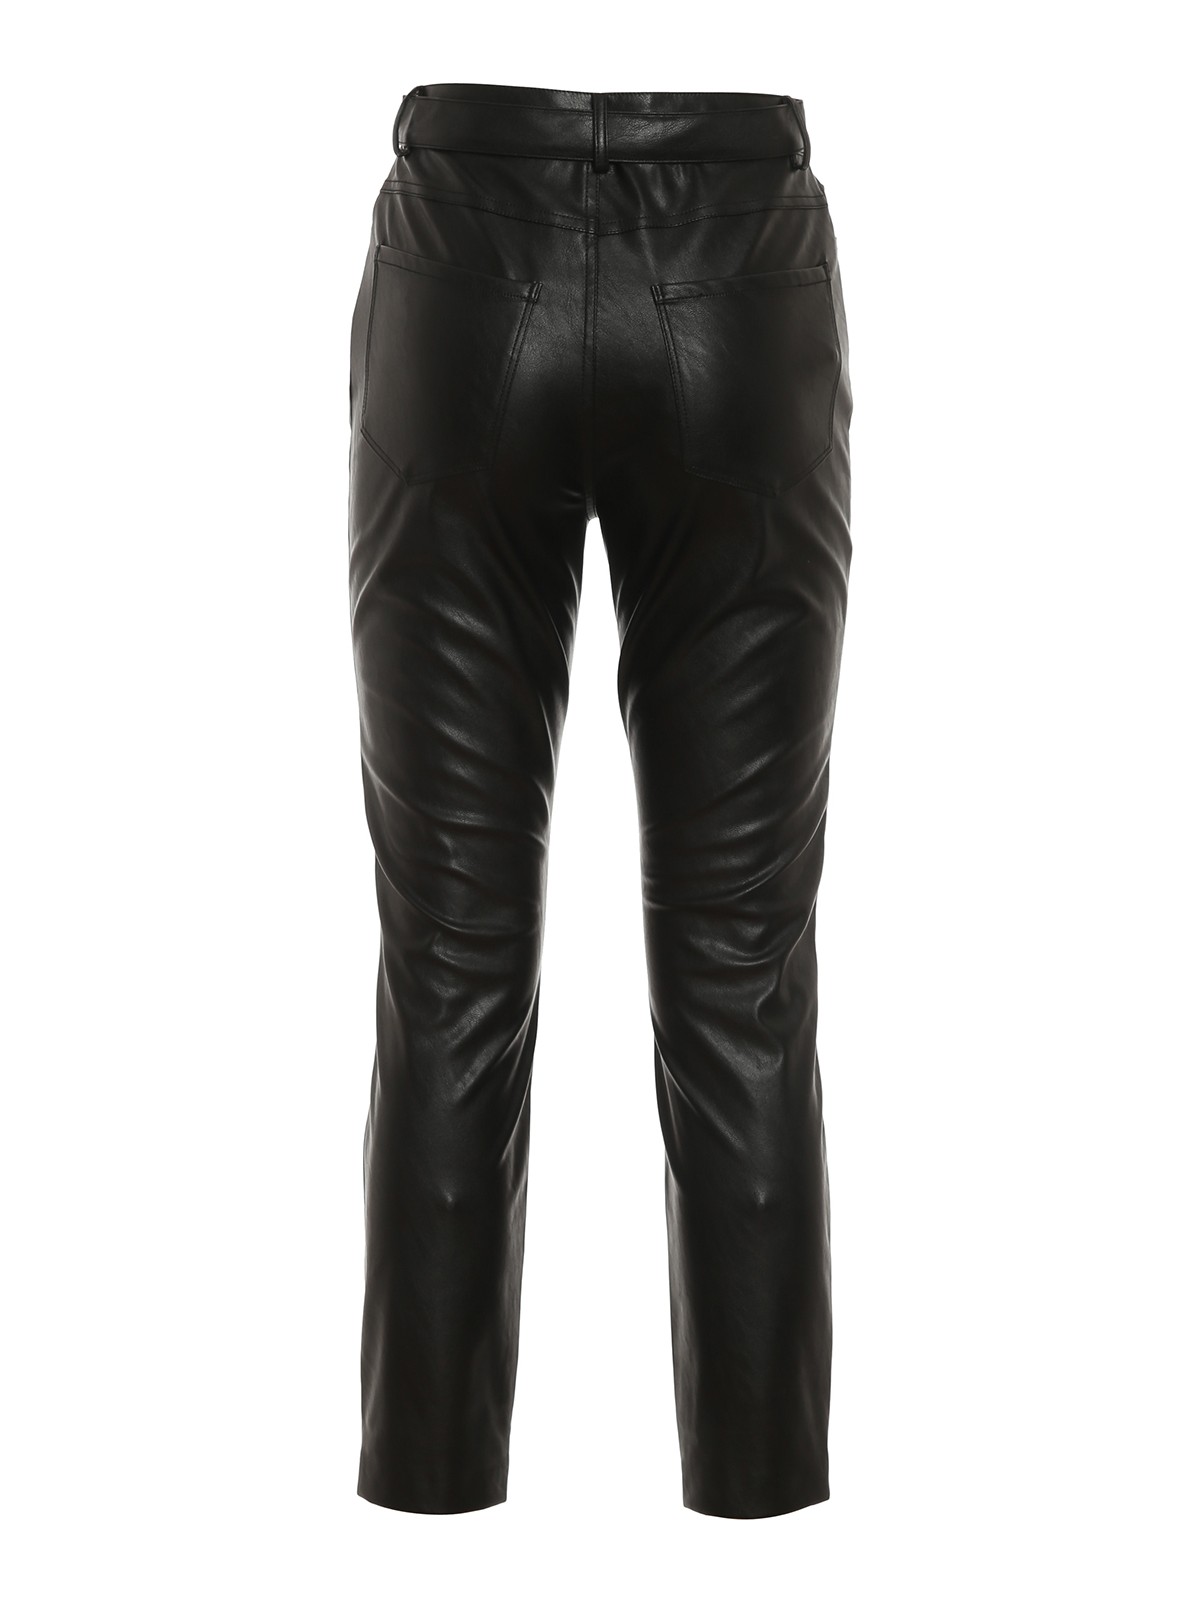 Leather trousers Pinko - Susan 15 pants - 1G16WU7105Z99 | iKRIX.com